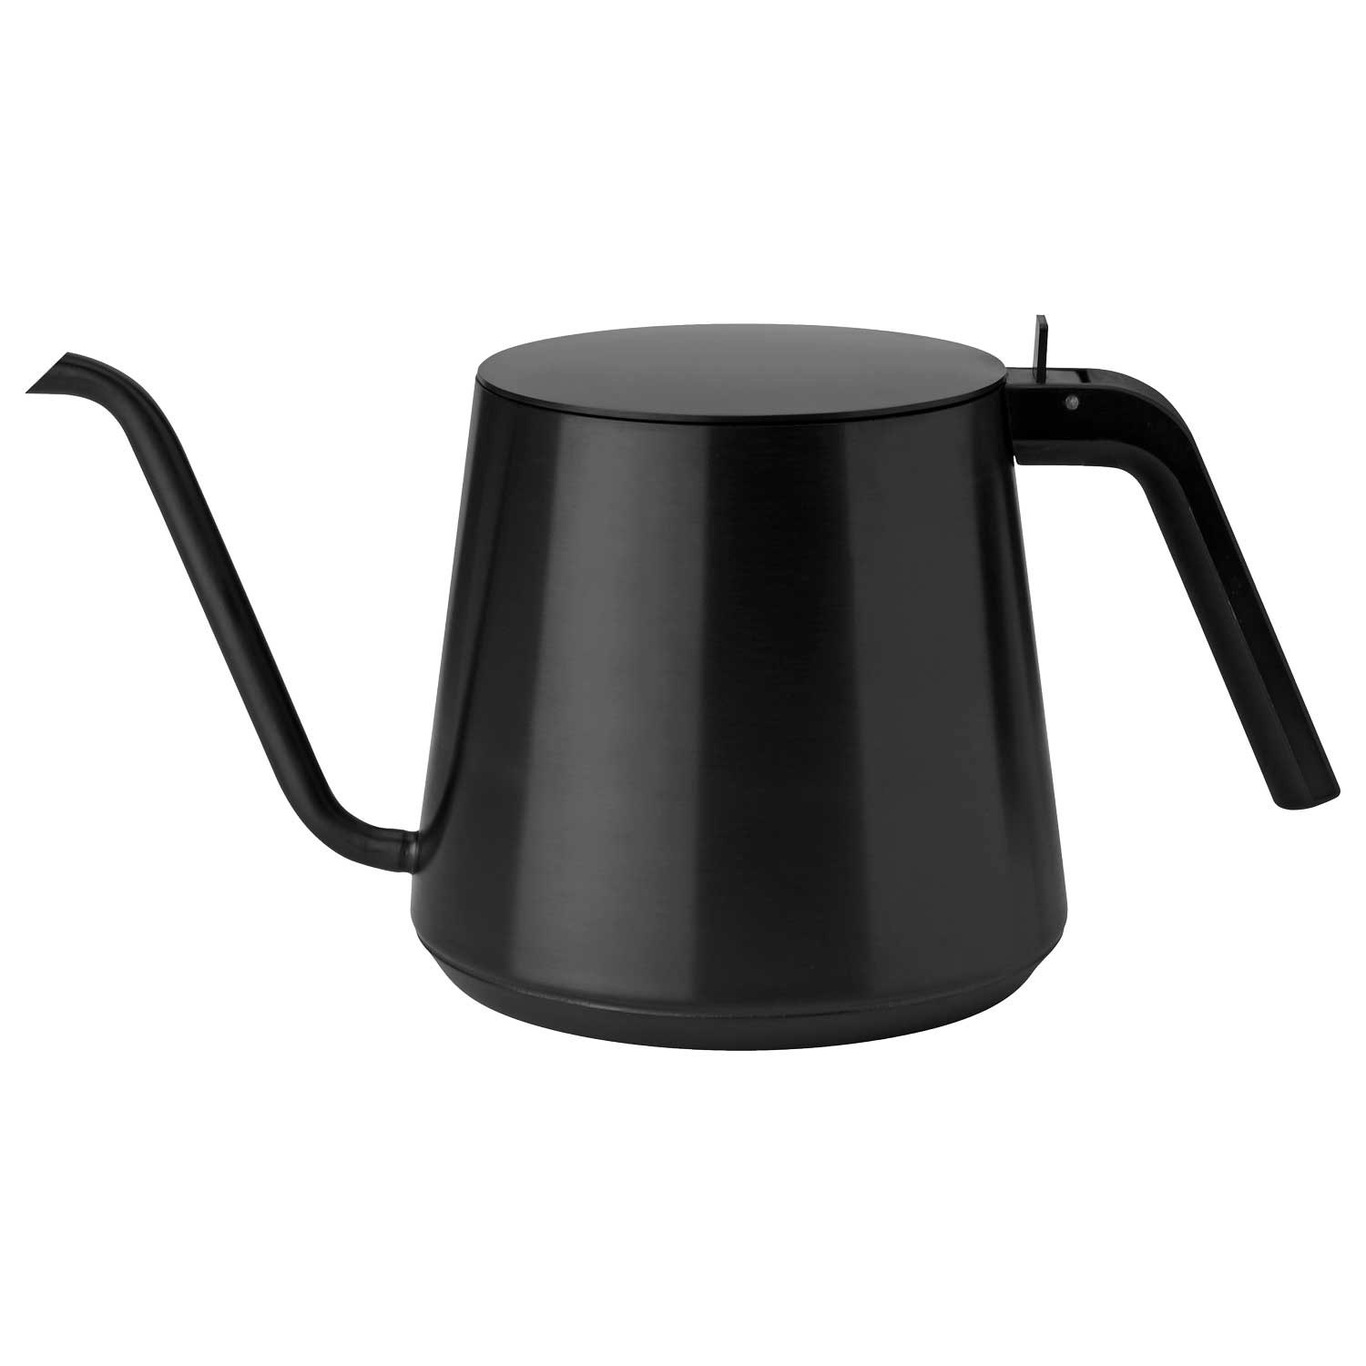 https://royaldesign.com/image/2/stelton-nohr-gooseneck-kettle-1-l-0?w=800&quality=80